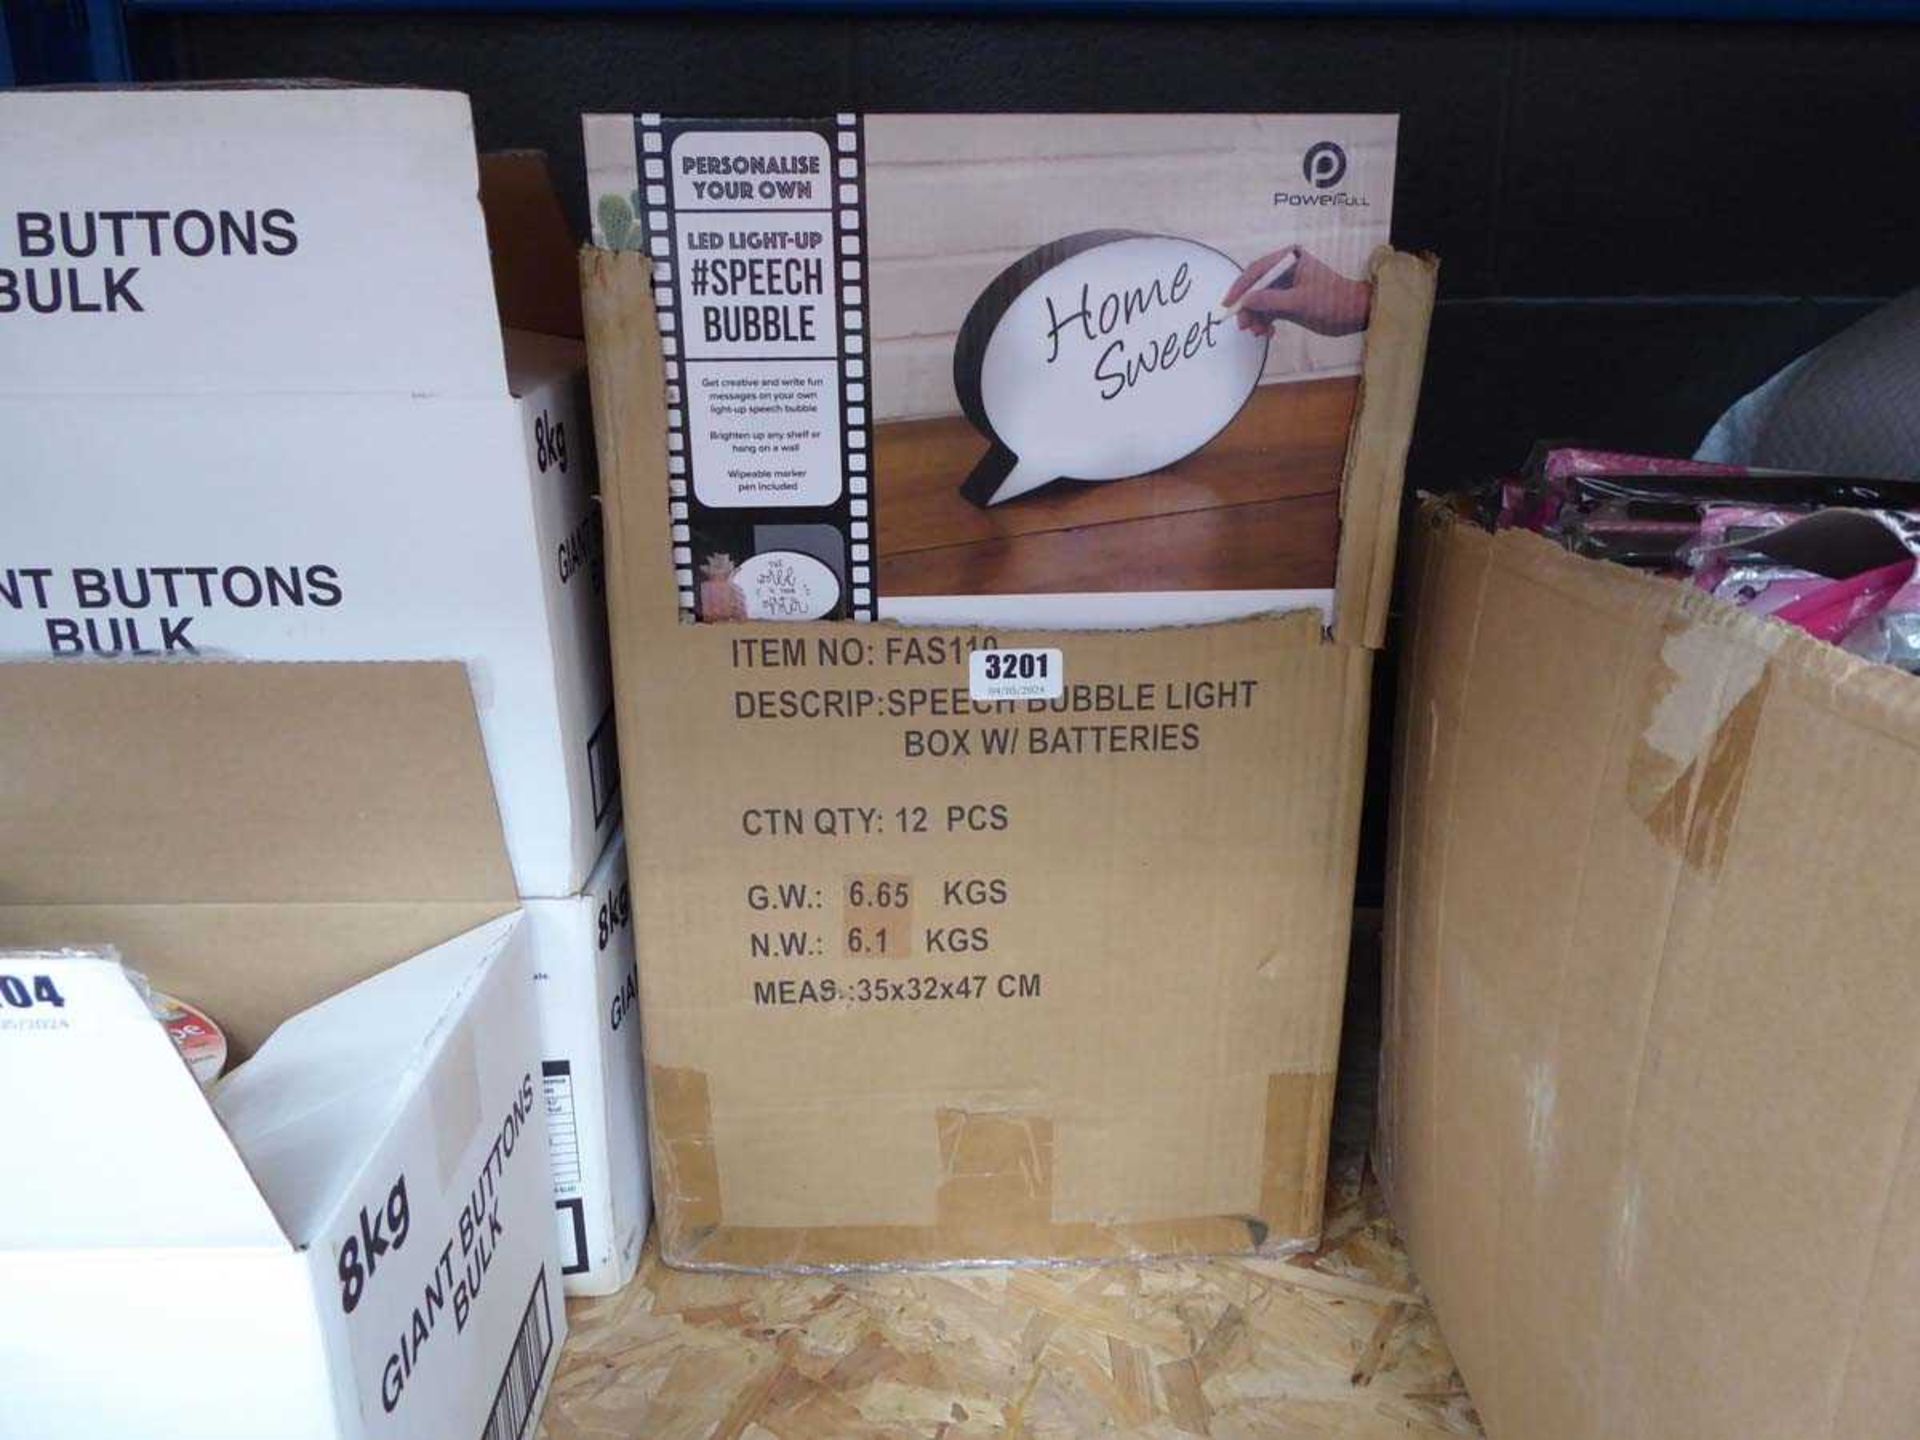 Box of LED lightup speech bubbles